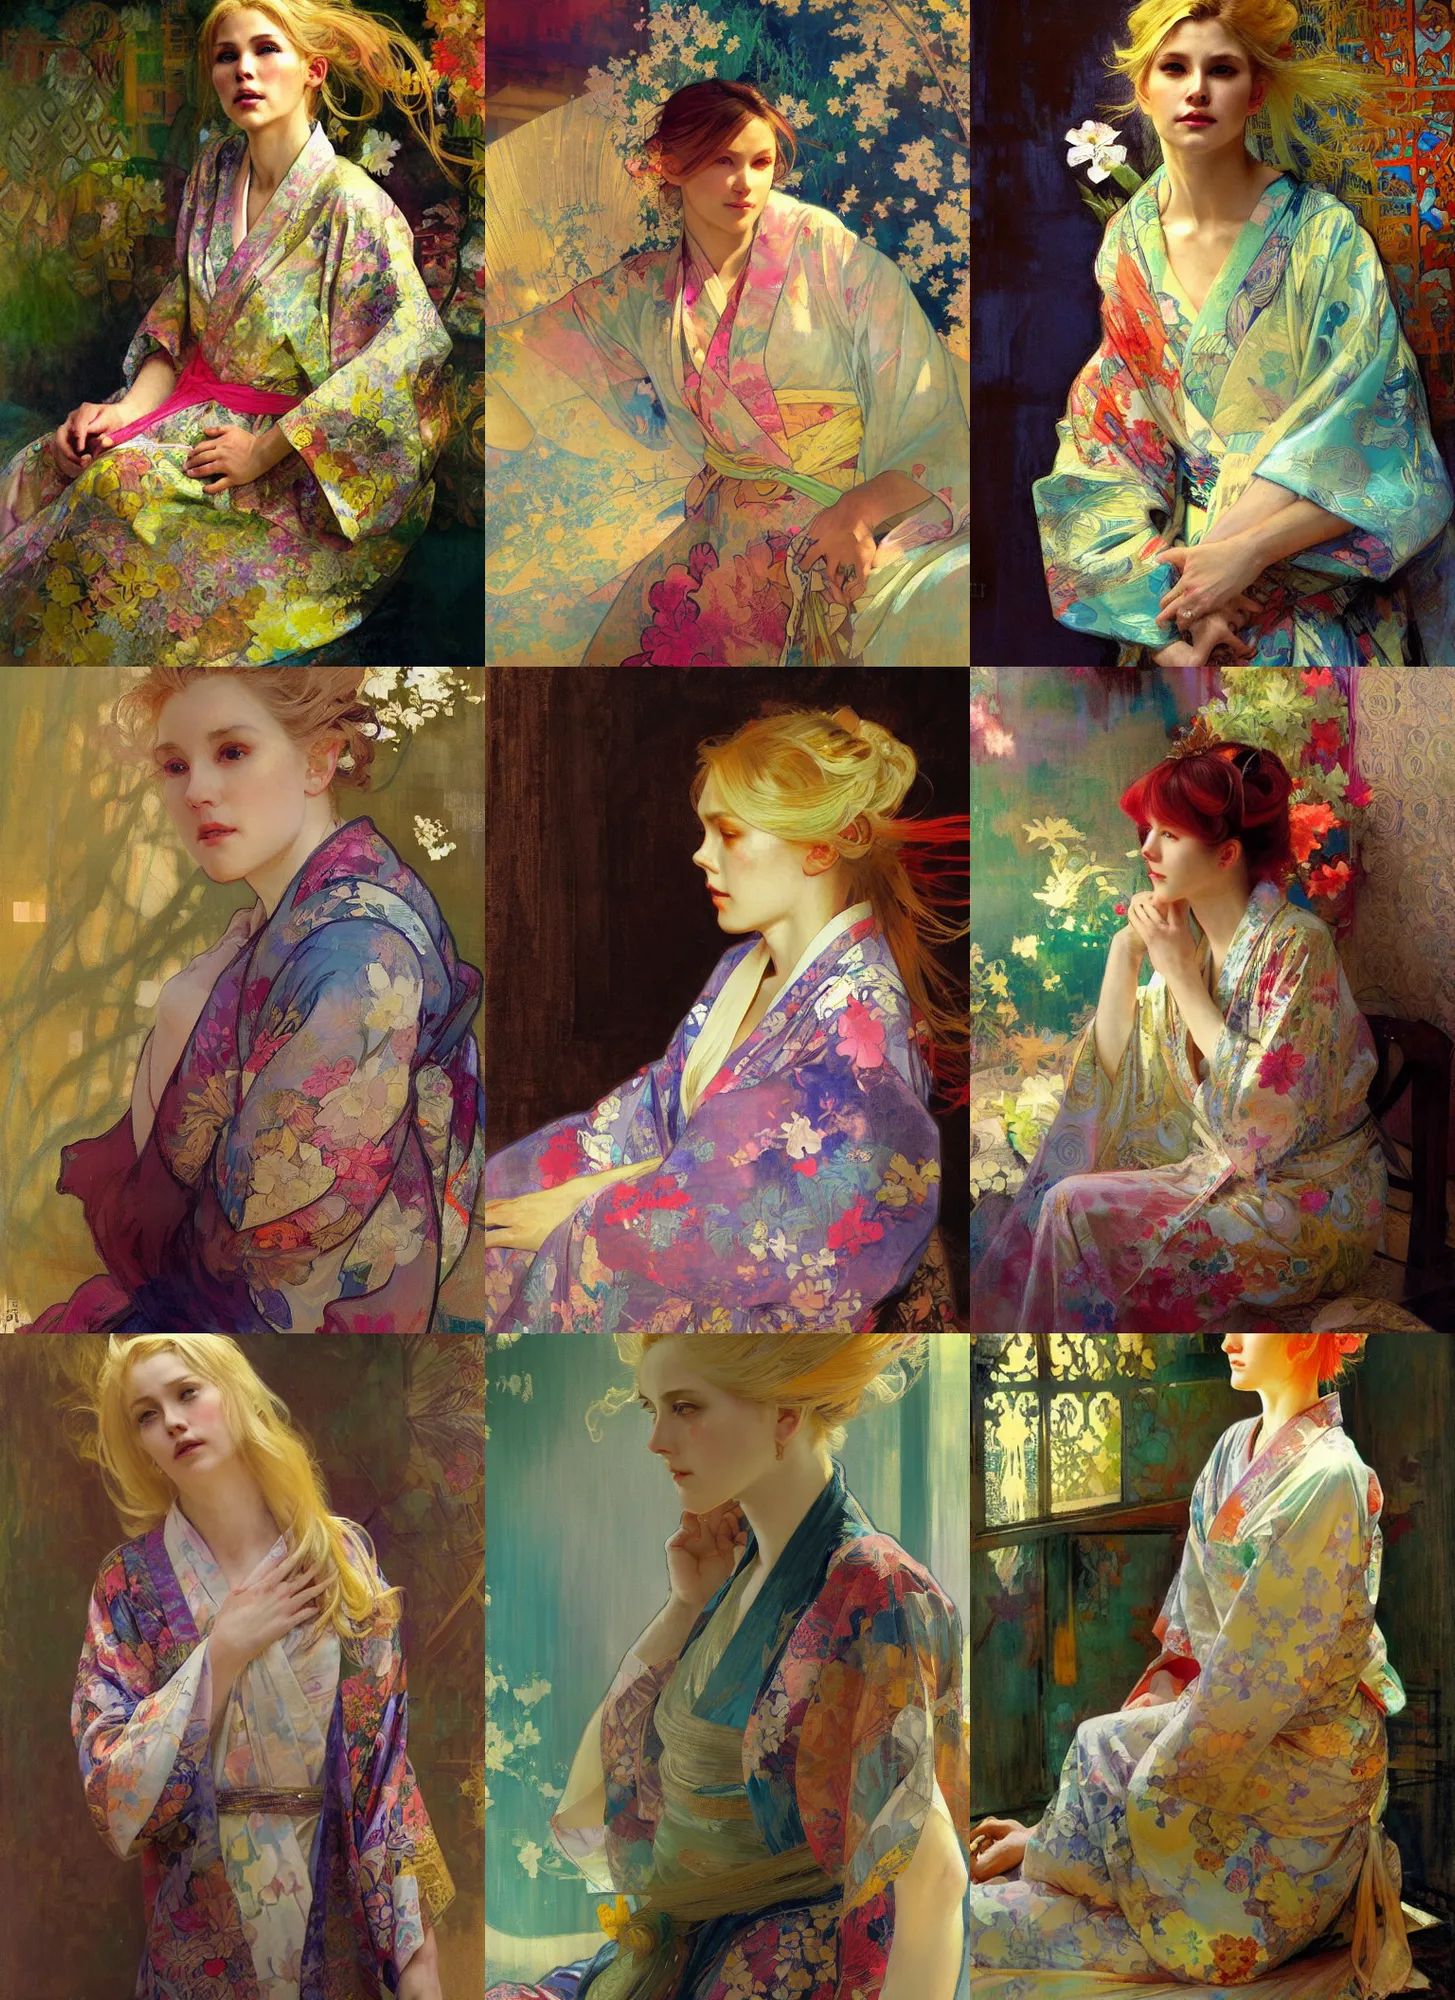 Prompt: a beautiful blond woman wearing a colorful yukata, by jeremy mann and alphonse mucha, dramatic lighting, ethereal